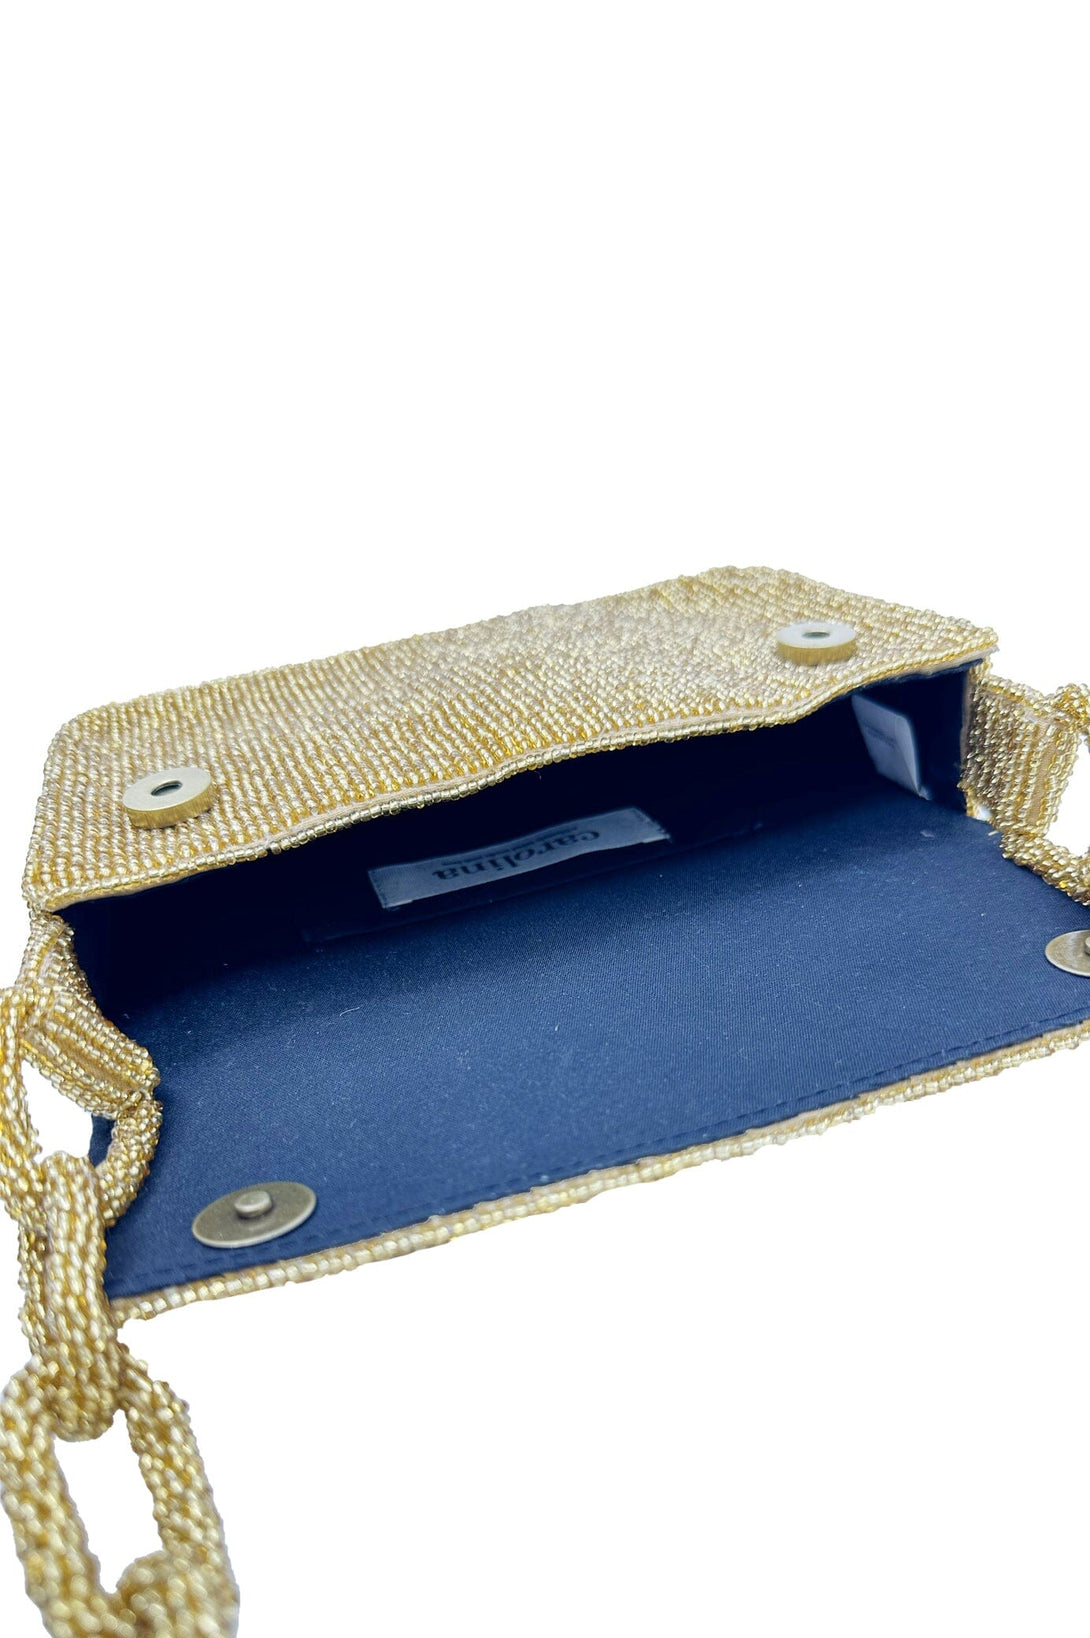 Nara Sequinned Clutch Bag Gold Seasonal Handbag